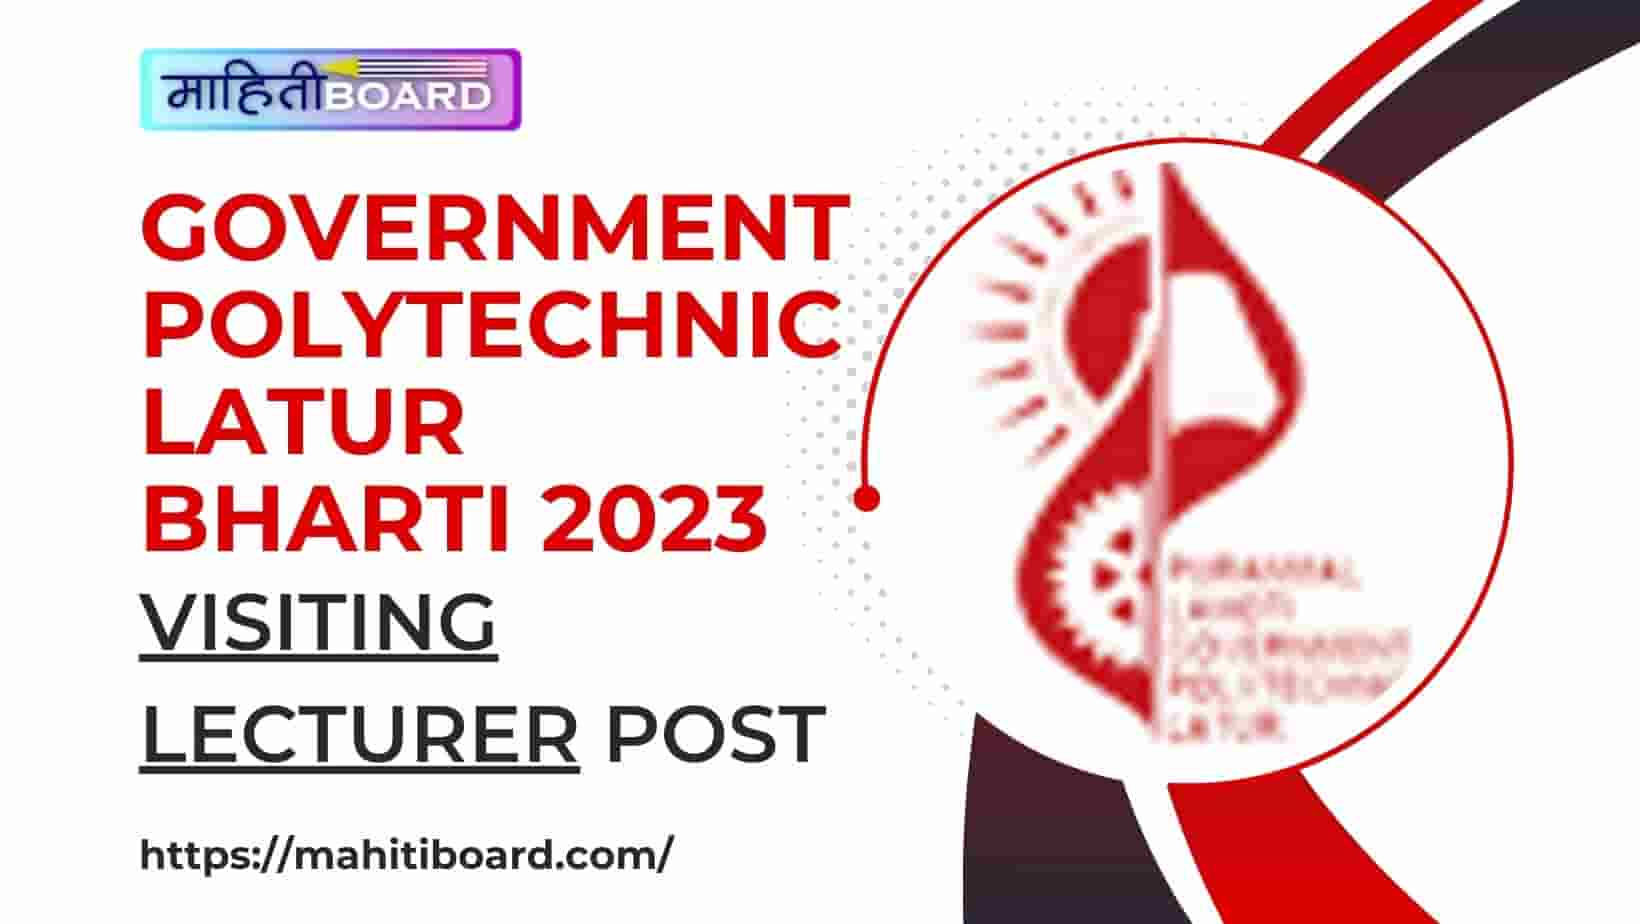 Government Polytechnic Latur Bharti 2023